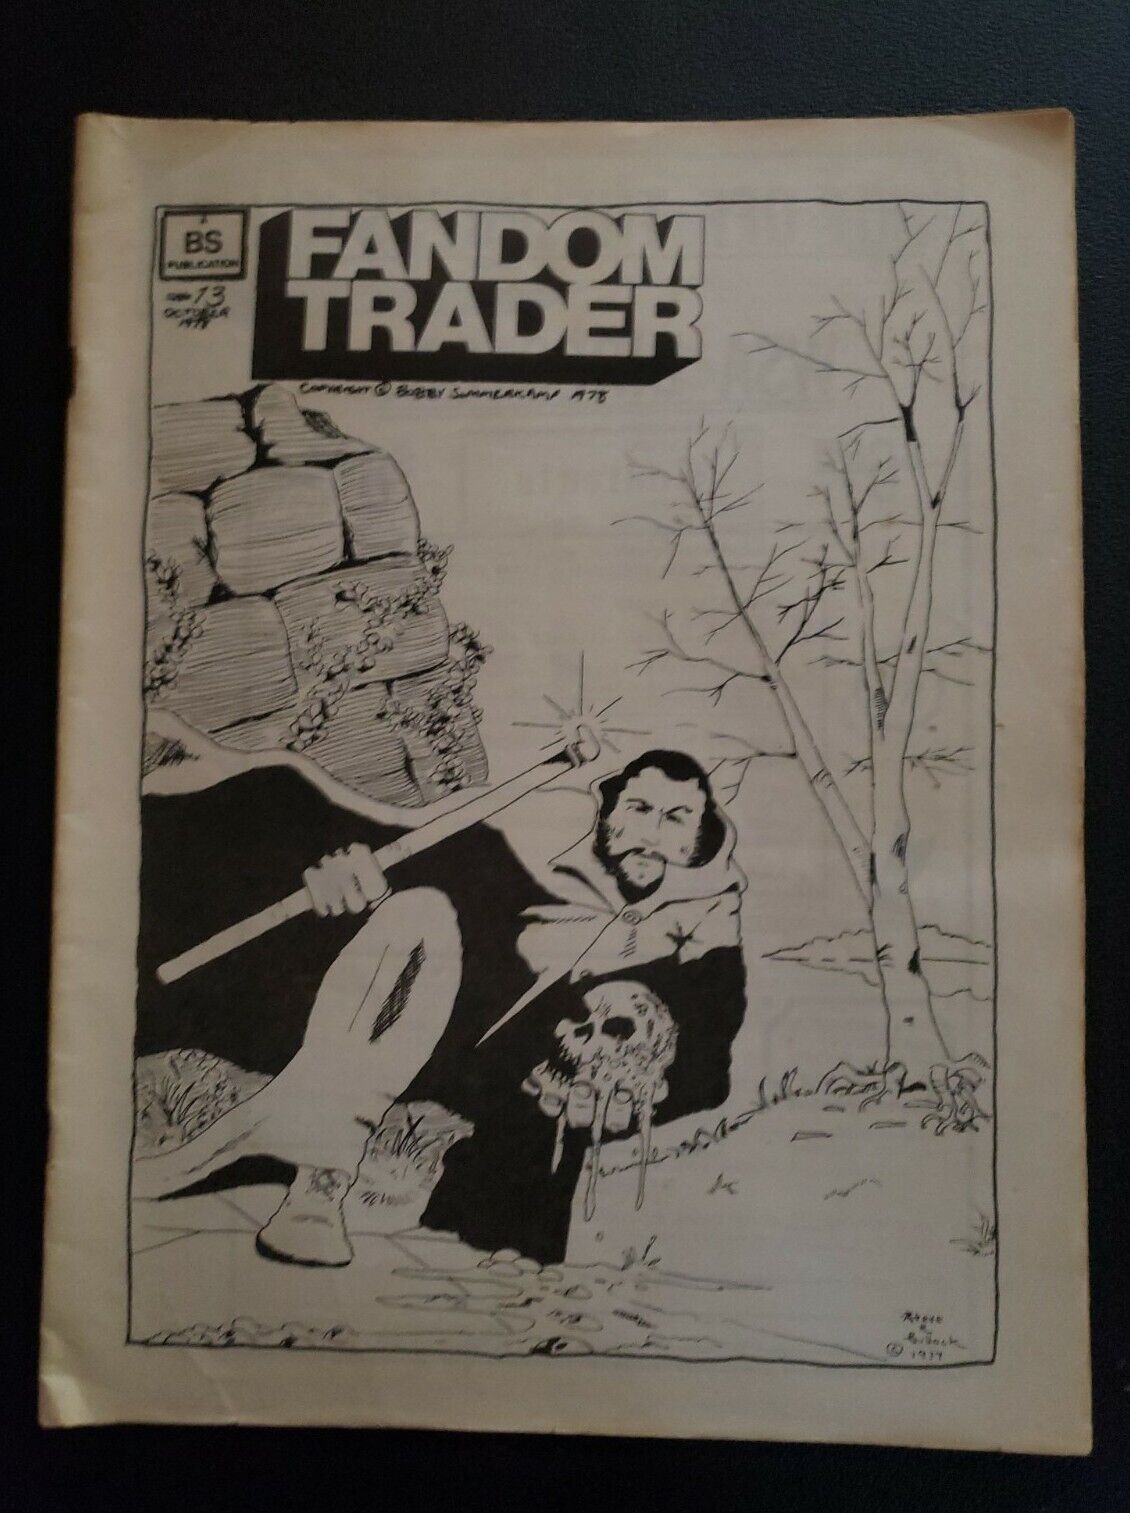 FANDOM TRADER #13 September 1978 comic book adzine fanzine Bronze Age 